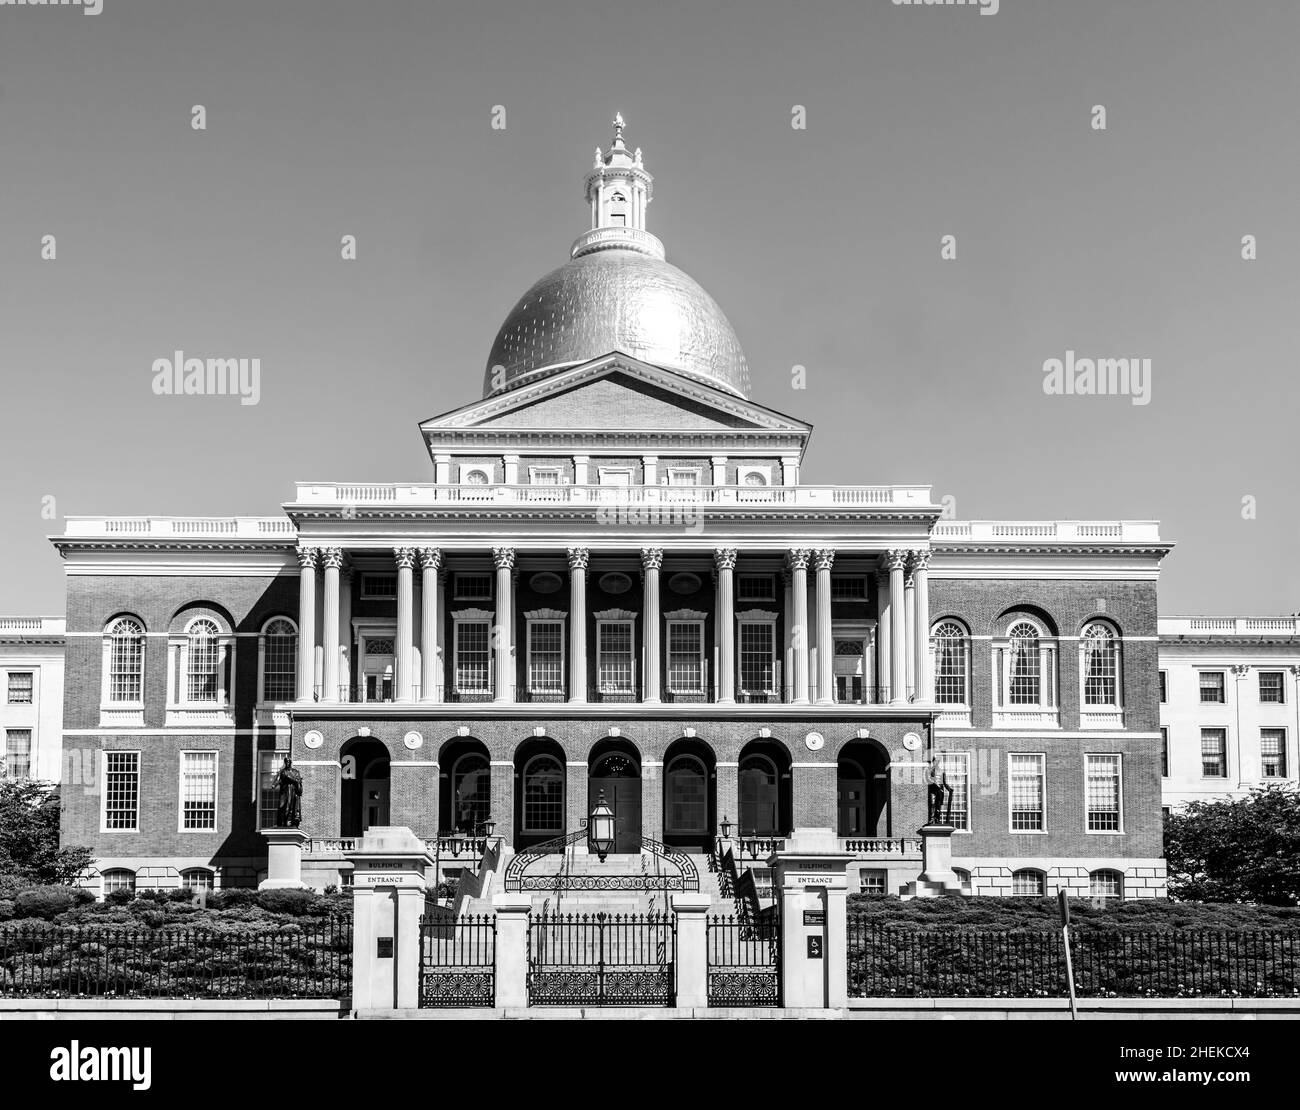 Massachusetts State House, Beacon Hill, Boston, ma - États-Unis Banque D'Images